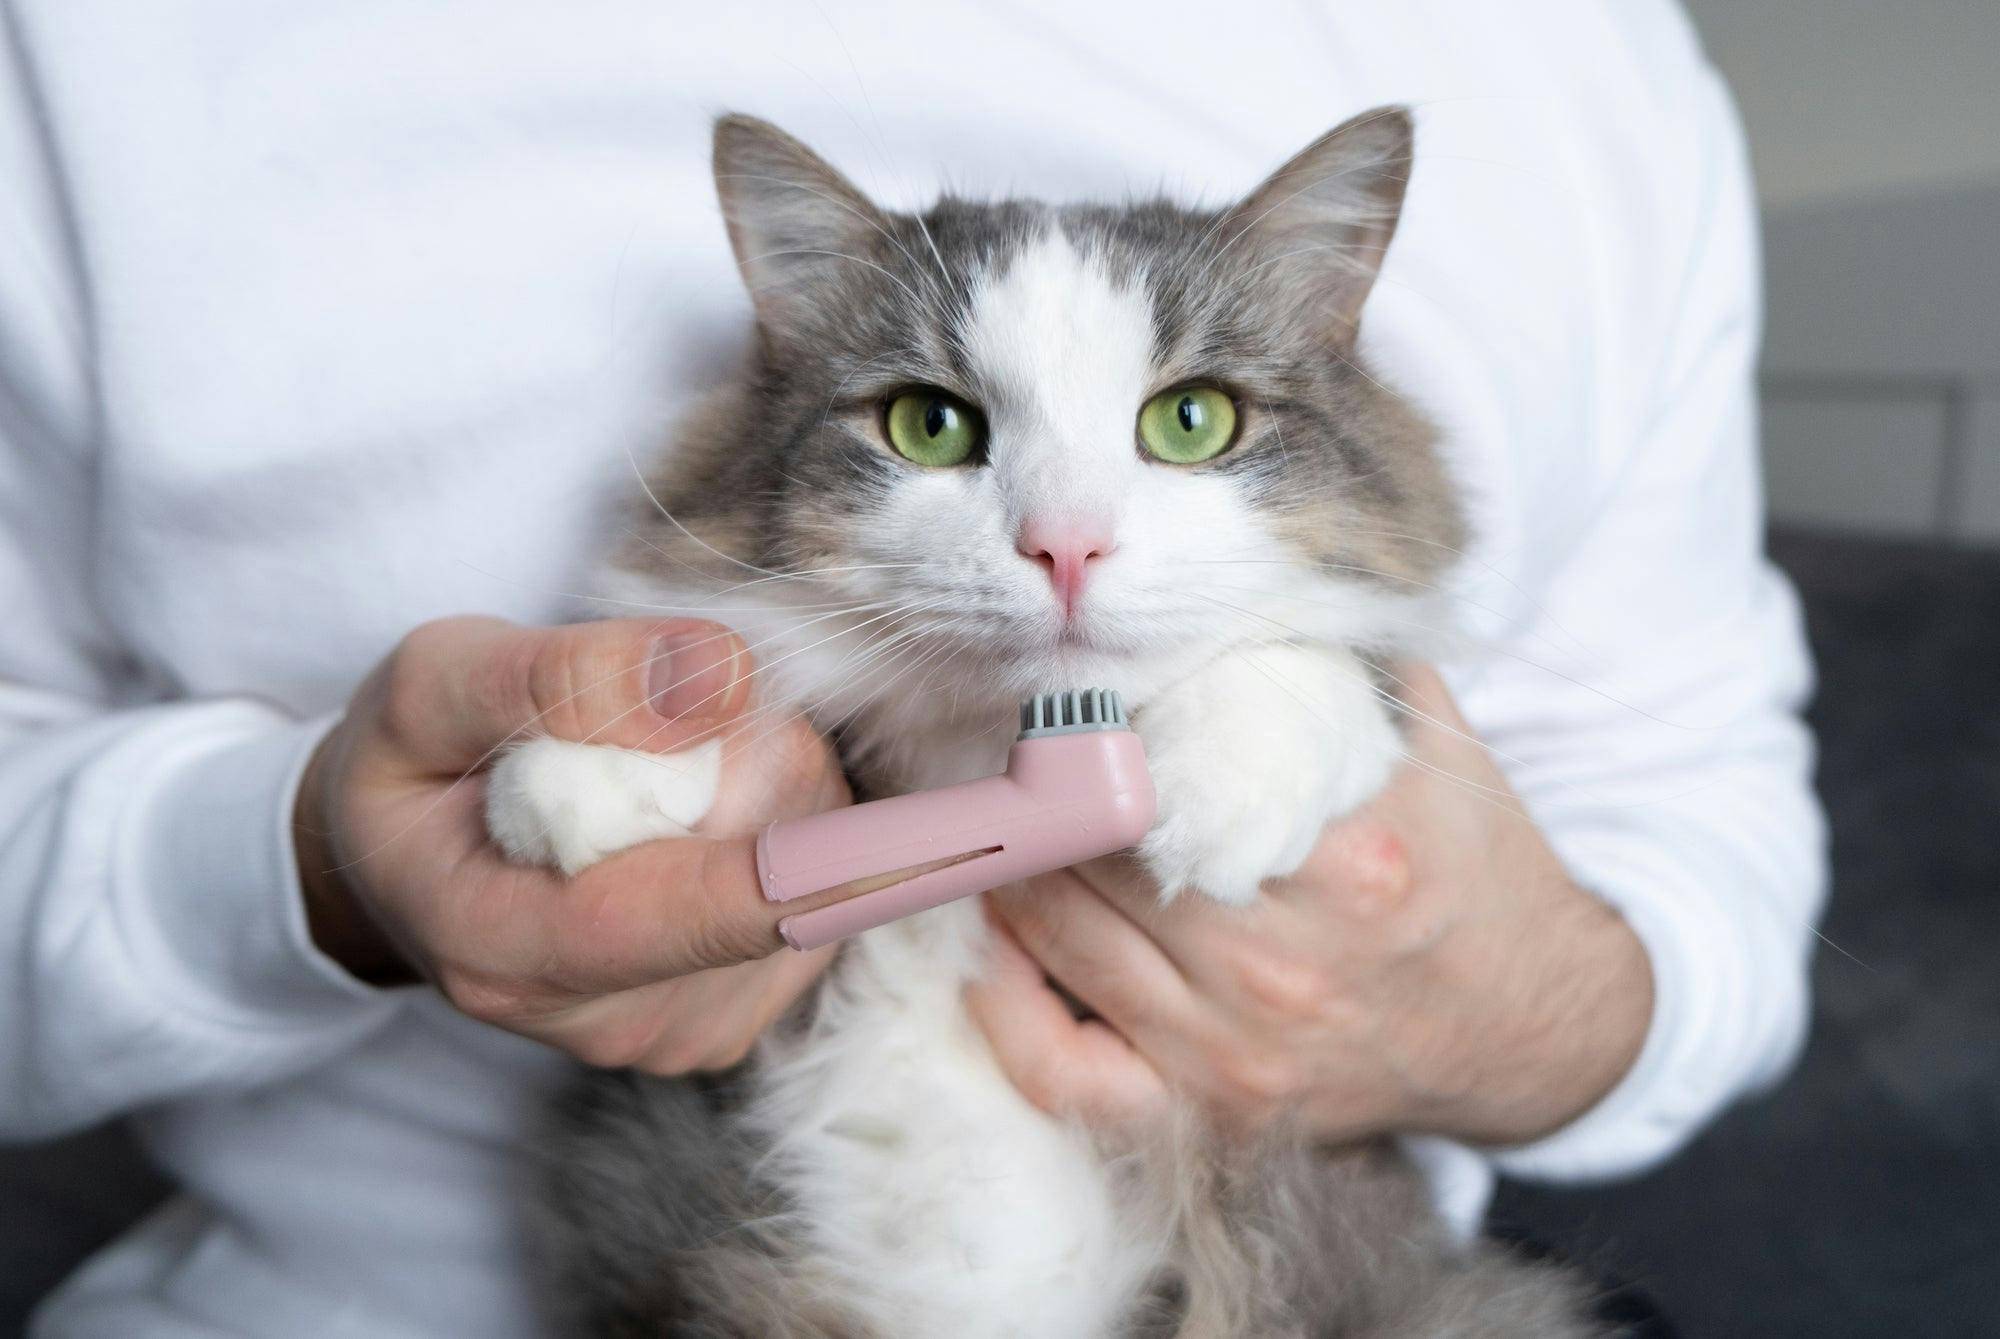 5 ways to brush your cat's teeth